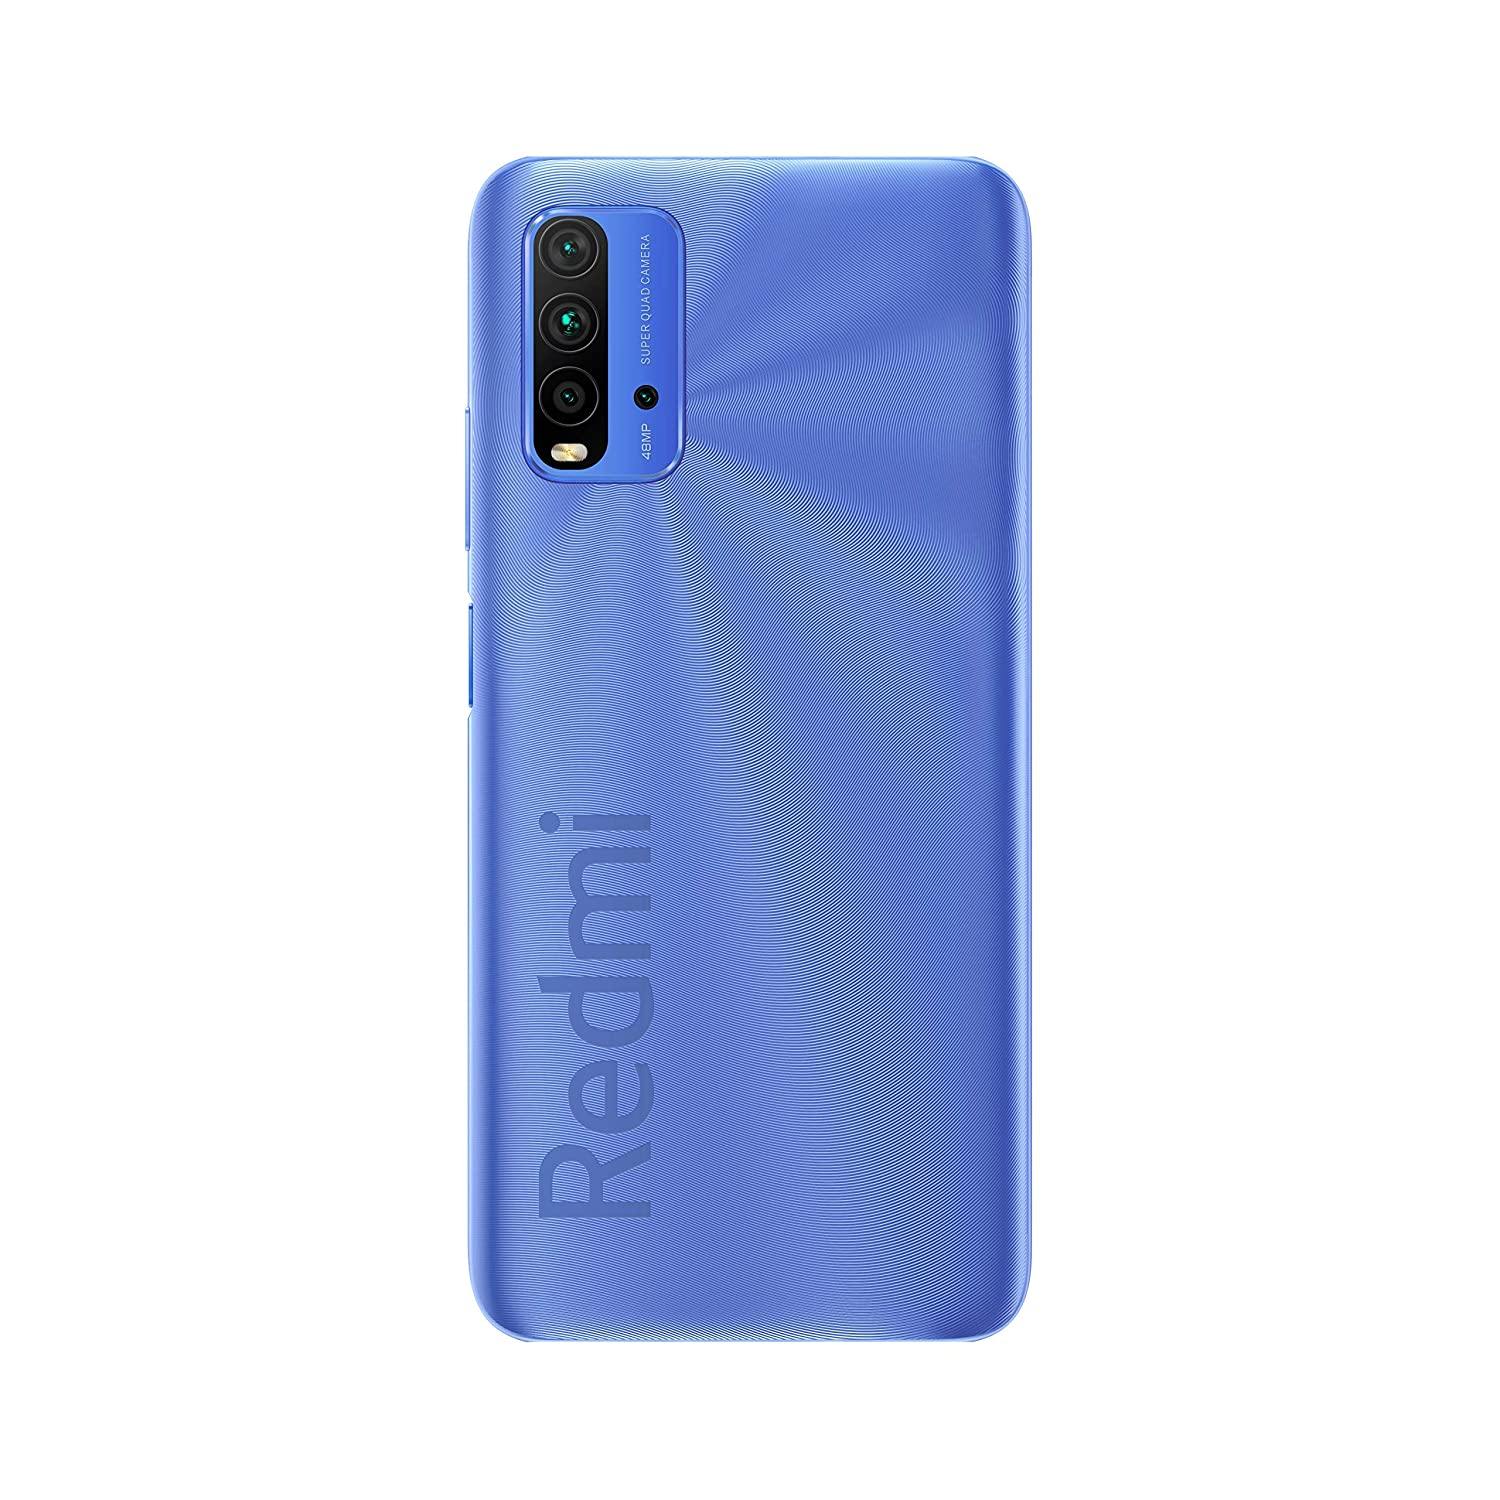 Redmi 9 Power (4GB RAM-128GB Storage) - 6000mAh Battery | 48MP Quad Camera-Mobile Phones-dealsplant